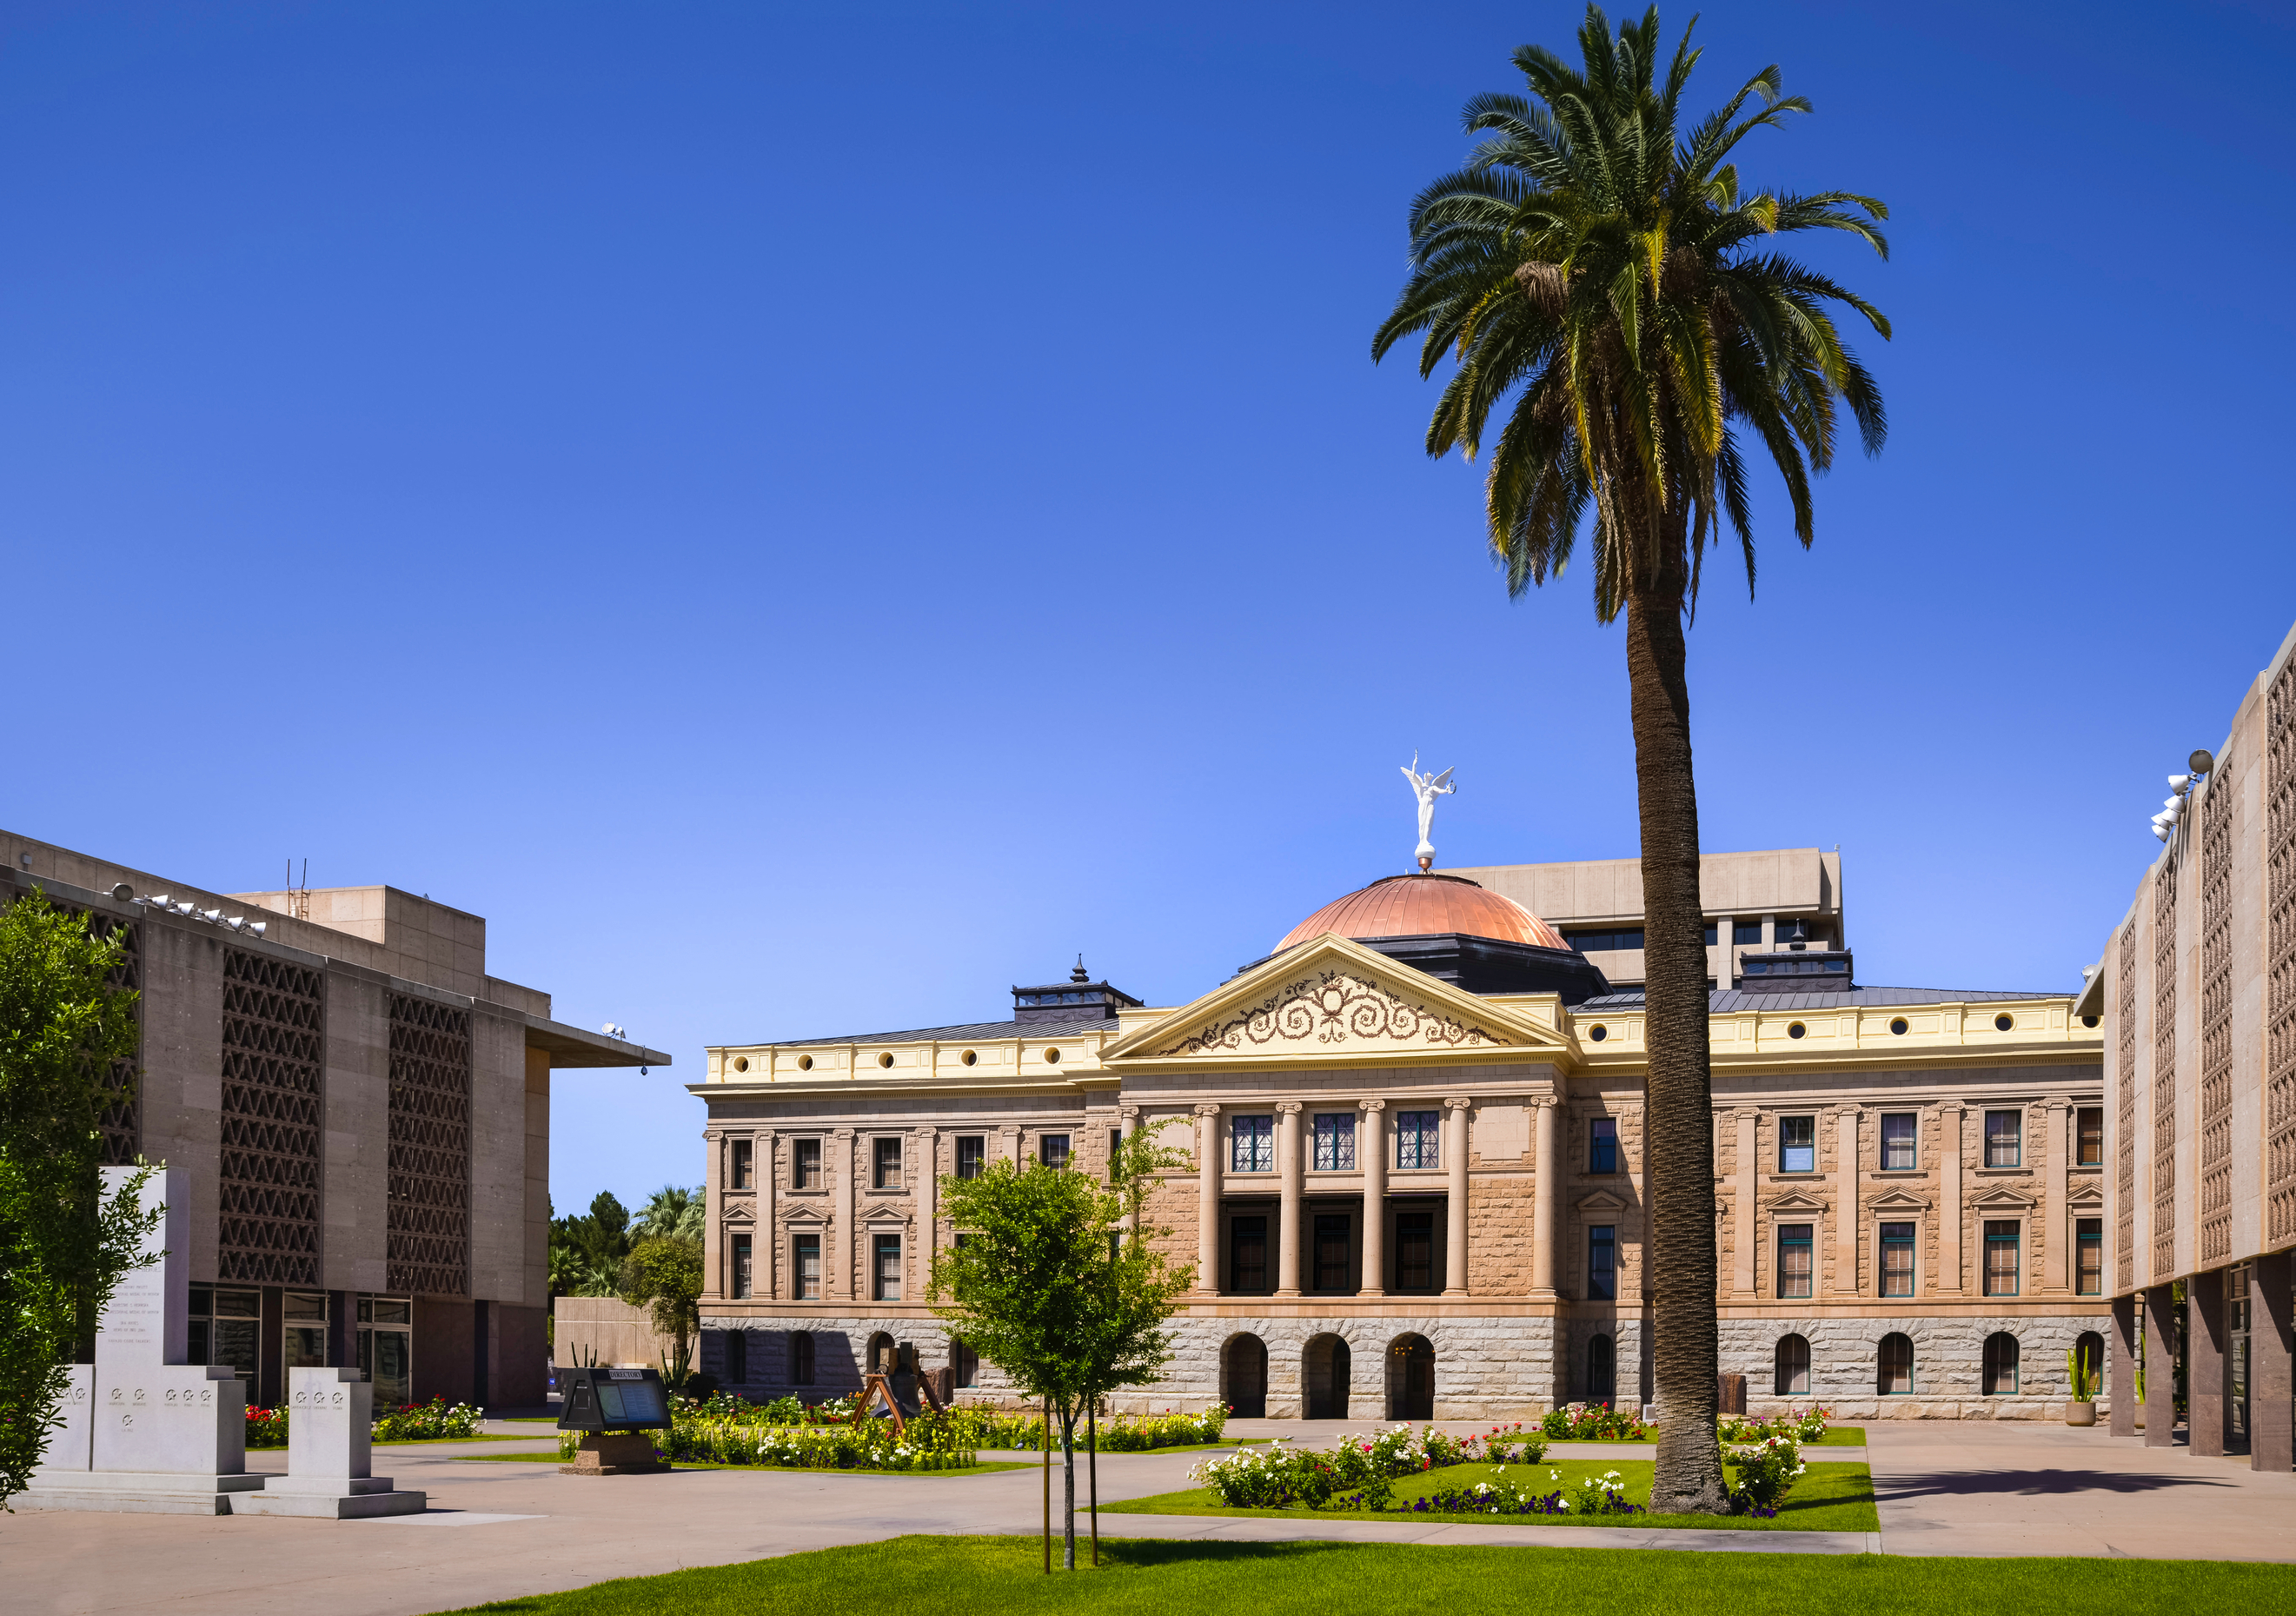 Phoenix Arizona State Capitol Building and Palm Tree